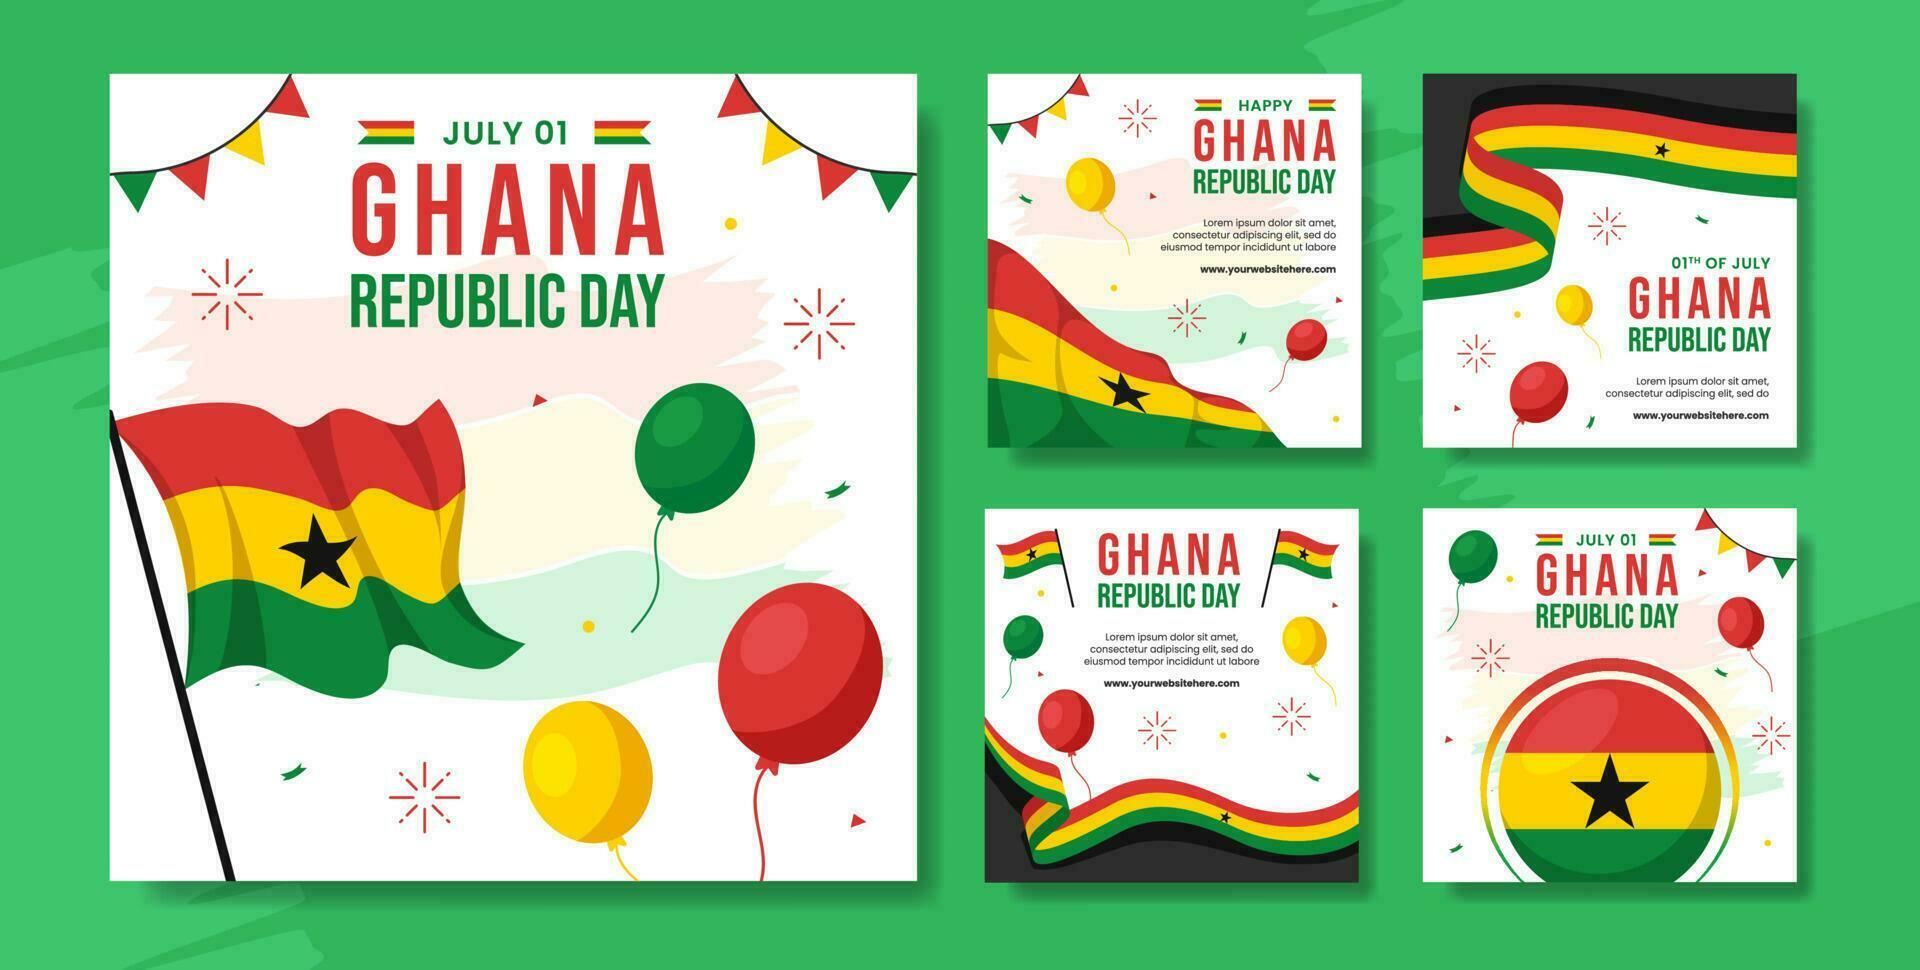 Ghana Republic Day Social Media Post Flat Cartoon Hand Drawn Templates Background Illustration vector